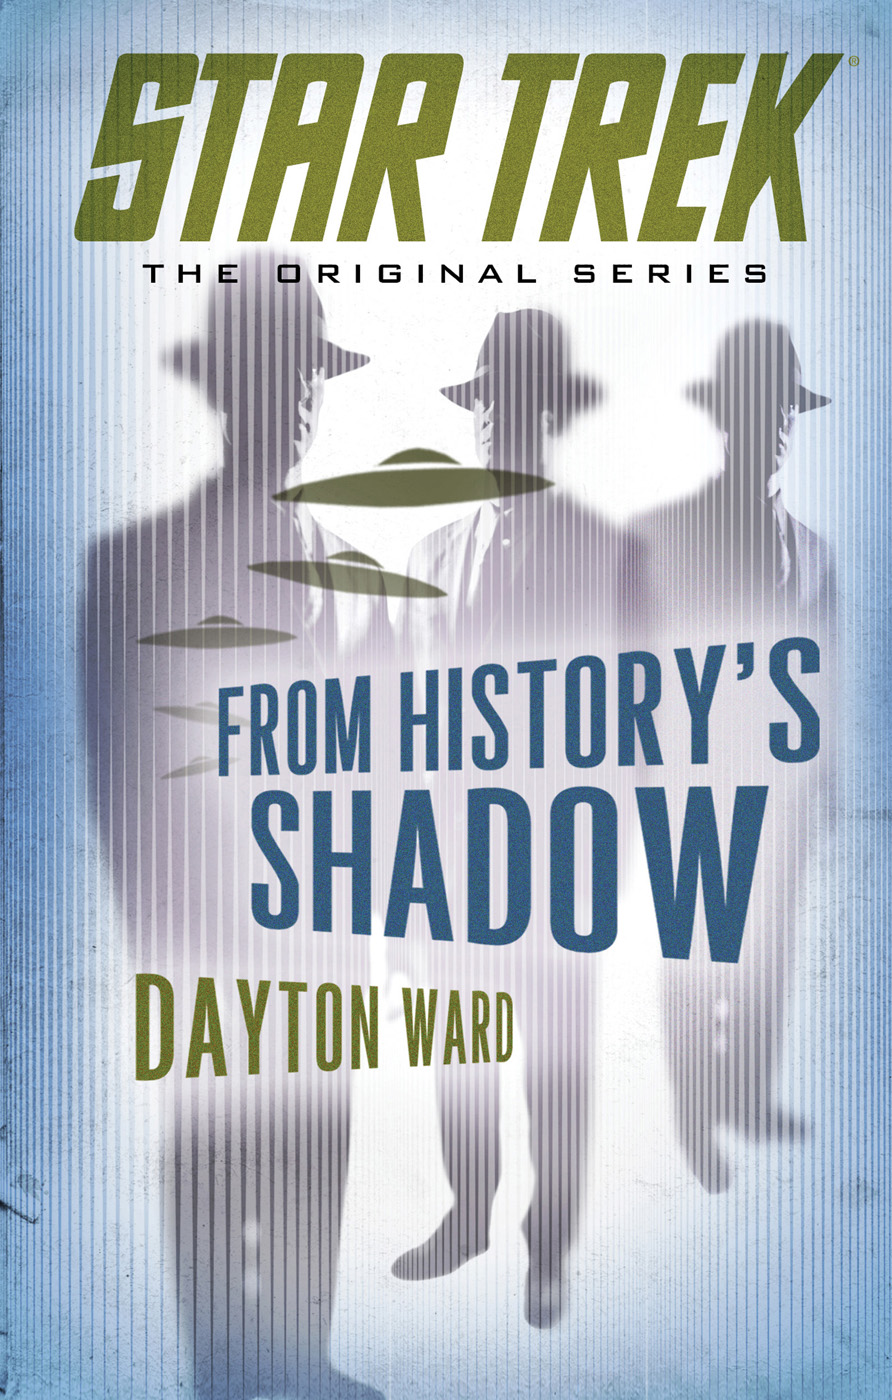 Star Trek: The Original Series - 155 - From History's Shadow